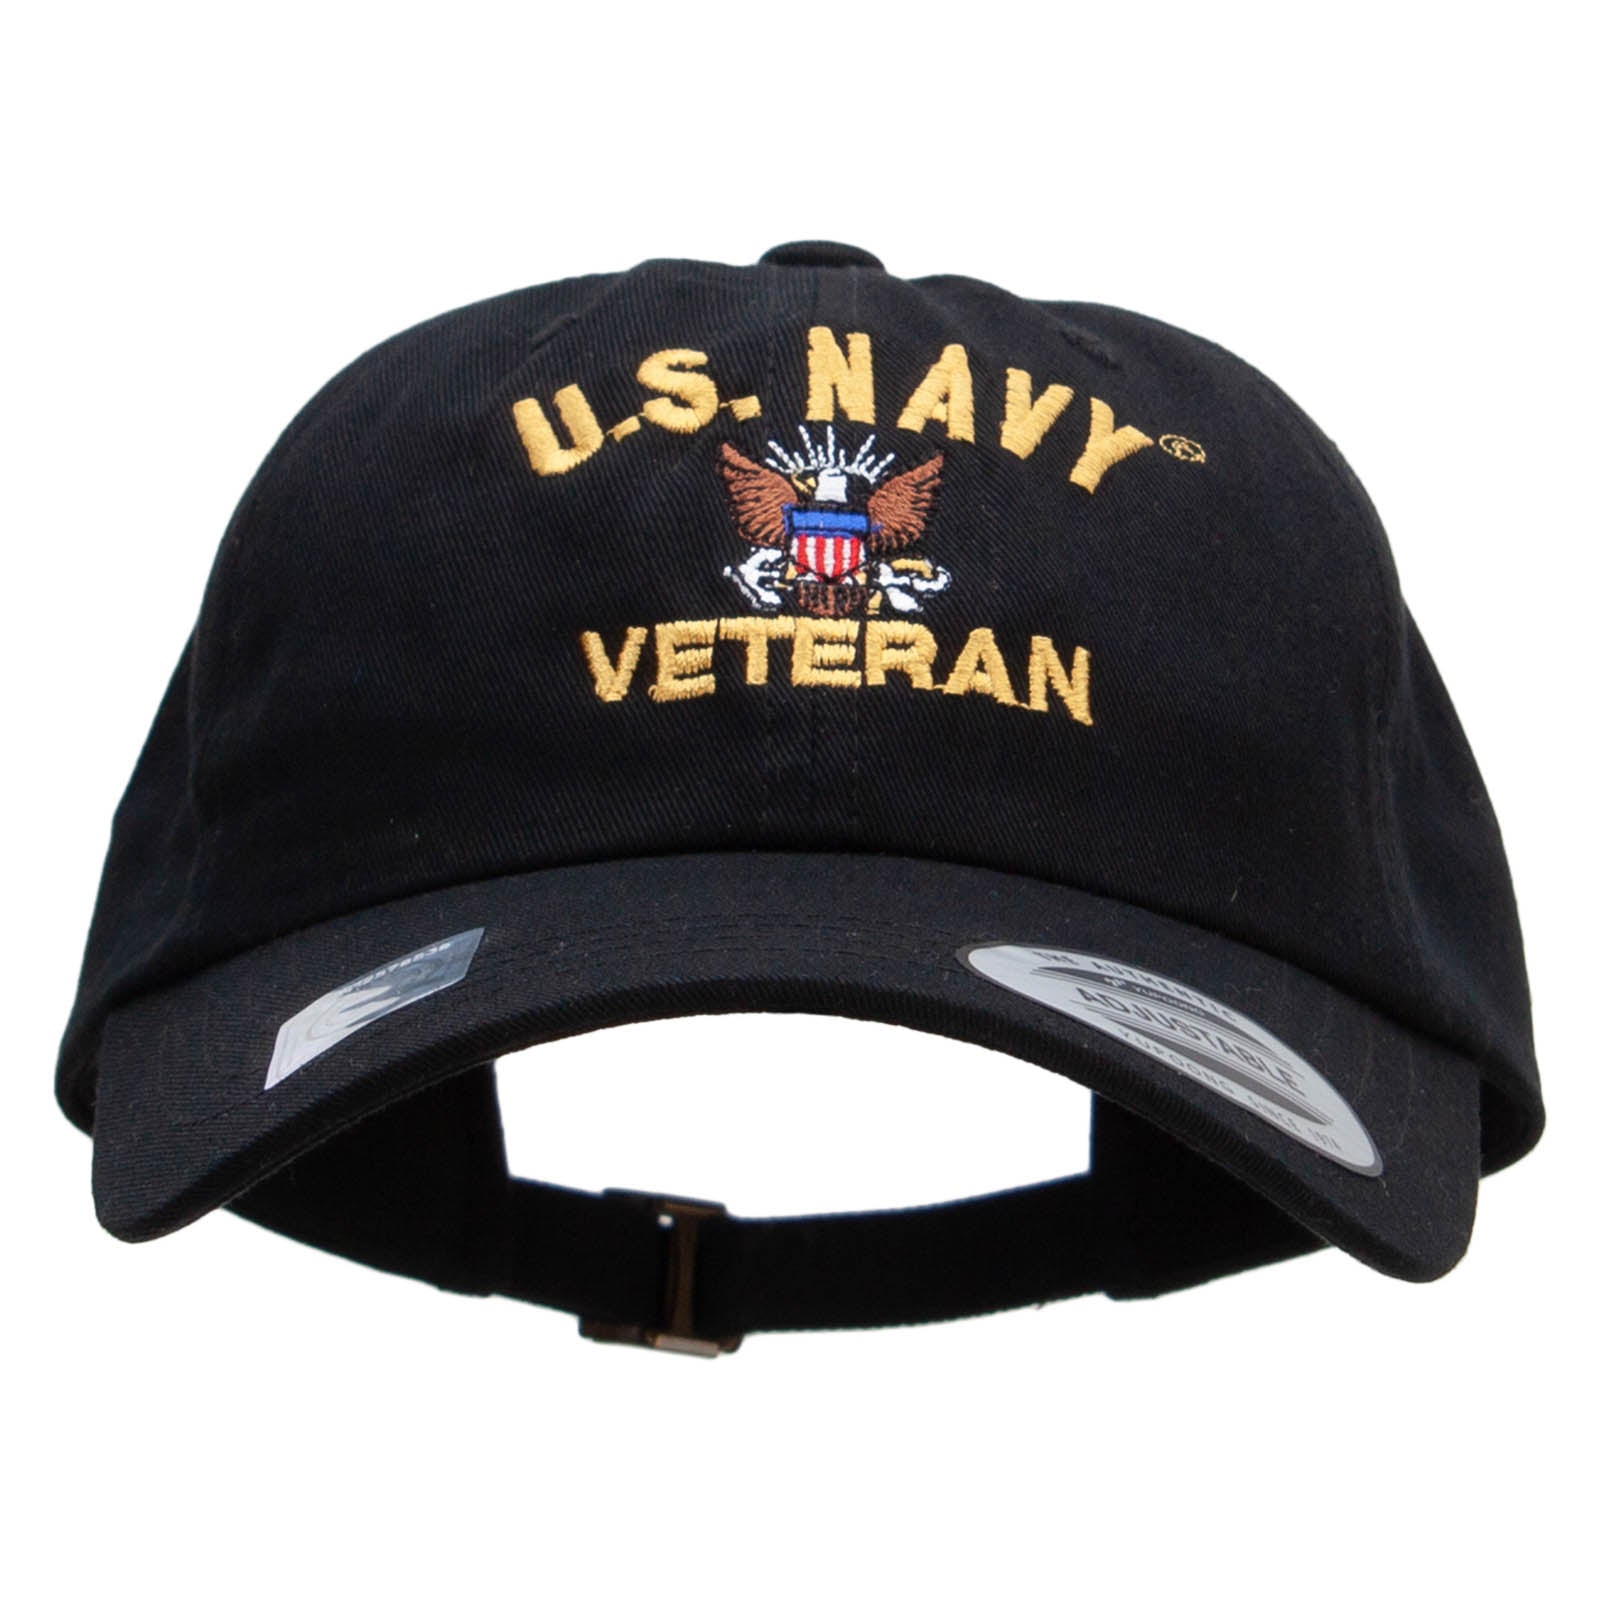 Licensed United States Navy Veterans Unstructured Low Profile 6 panel Cotton Cap - Black OSFM